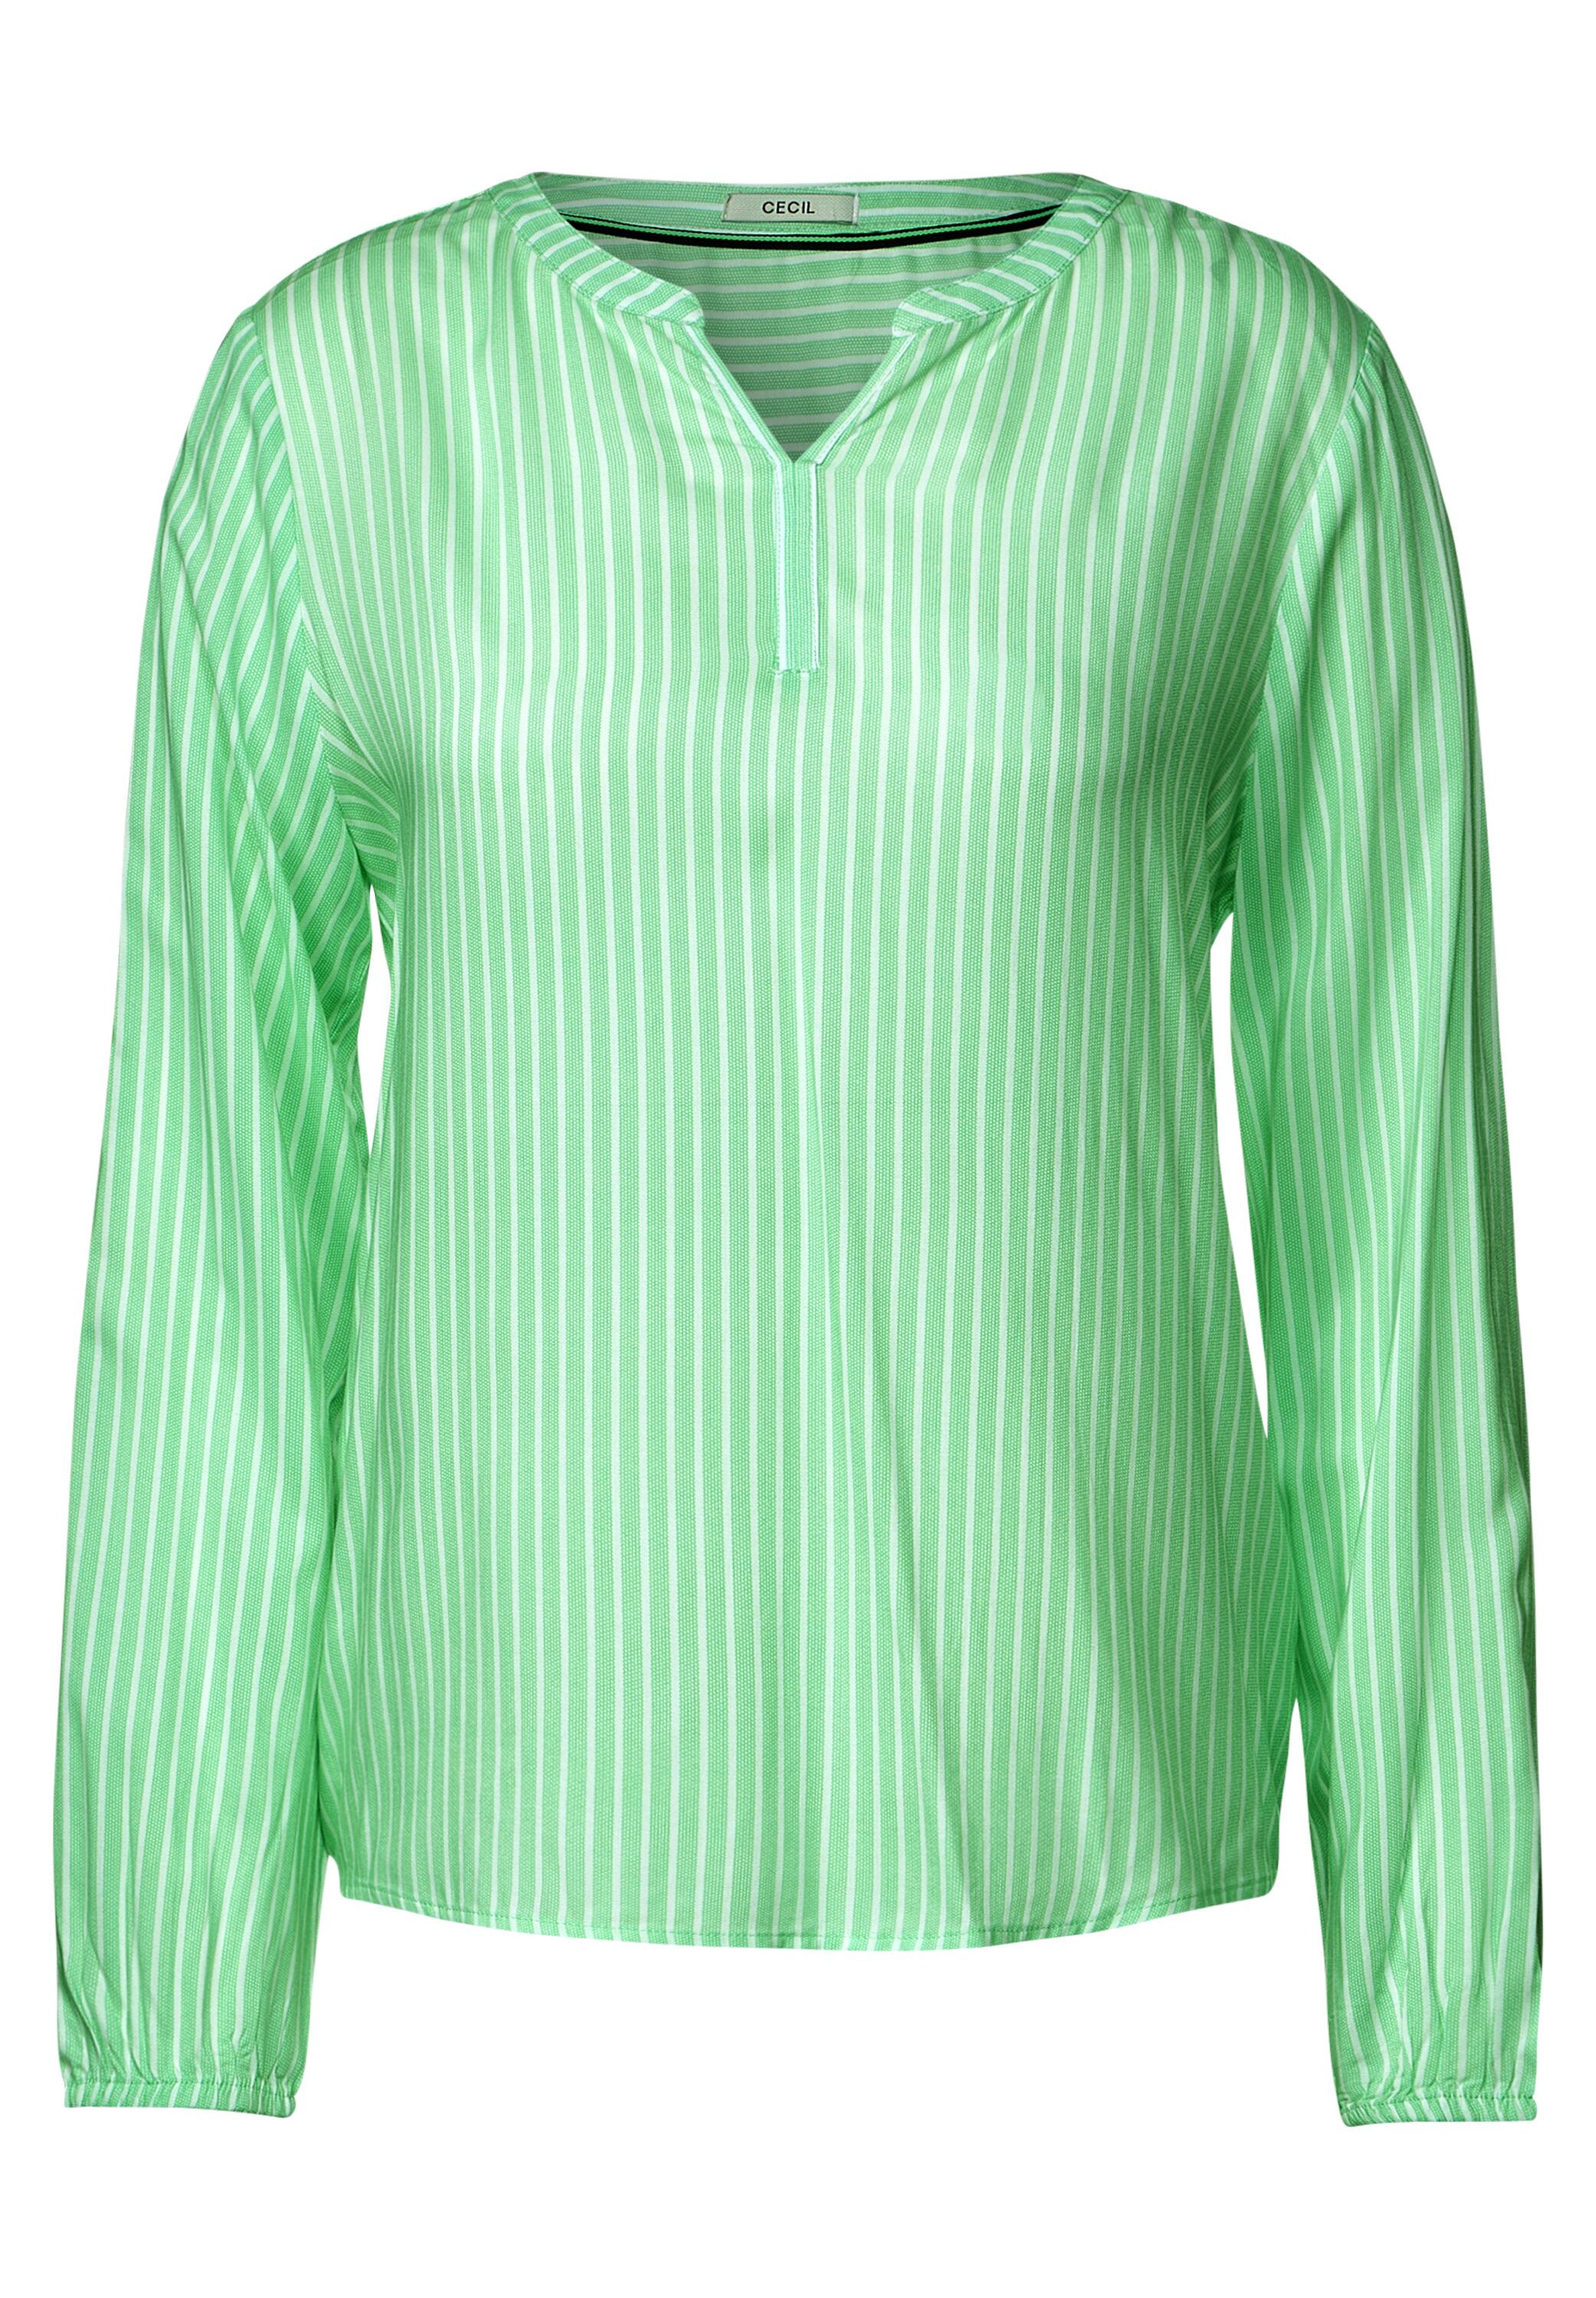 CECIL Bluse in Smash Green im SALE reduziert B343698-24617 - CONCEPT Mode